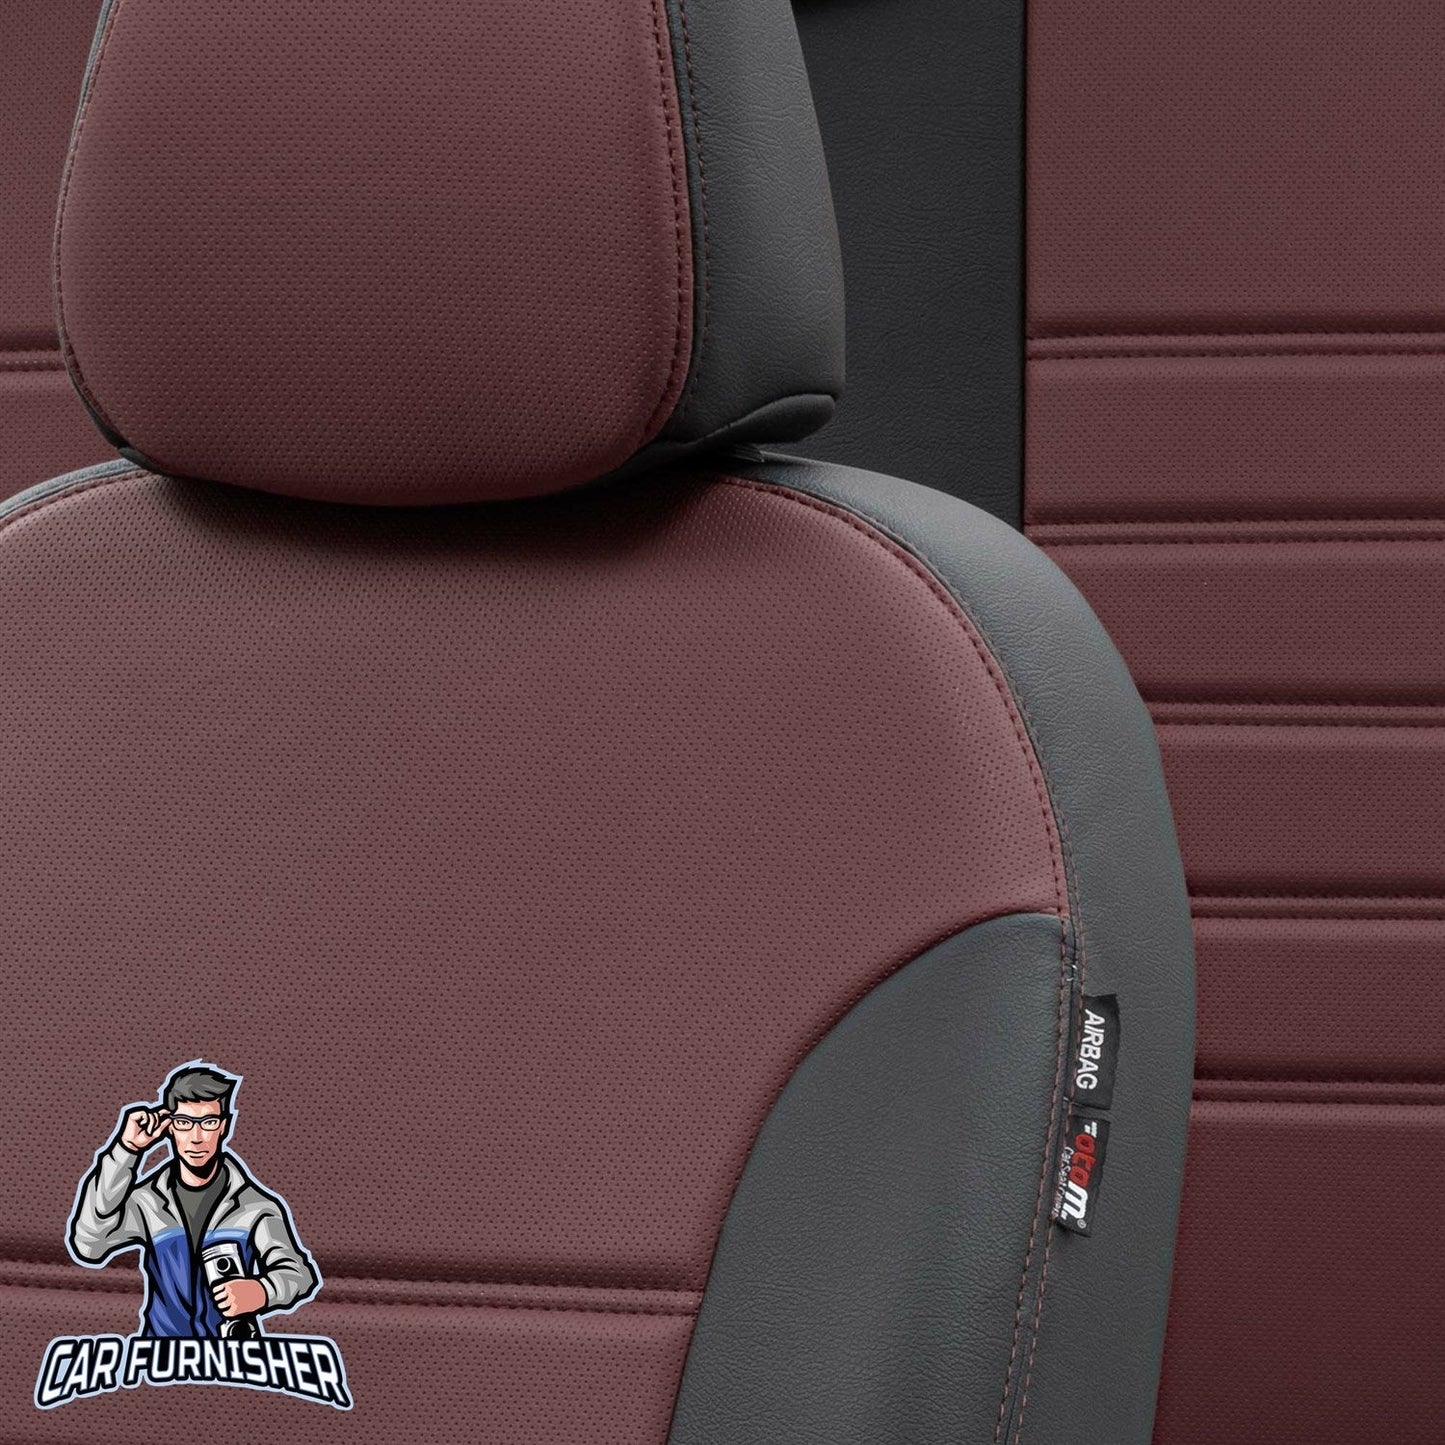 Isuzu L35 Seat Cover Istanbul Leather Design Burgundy Leather